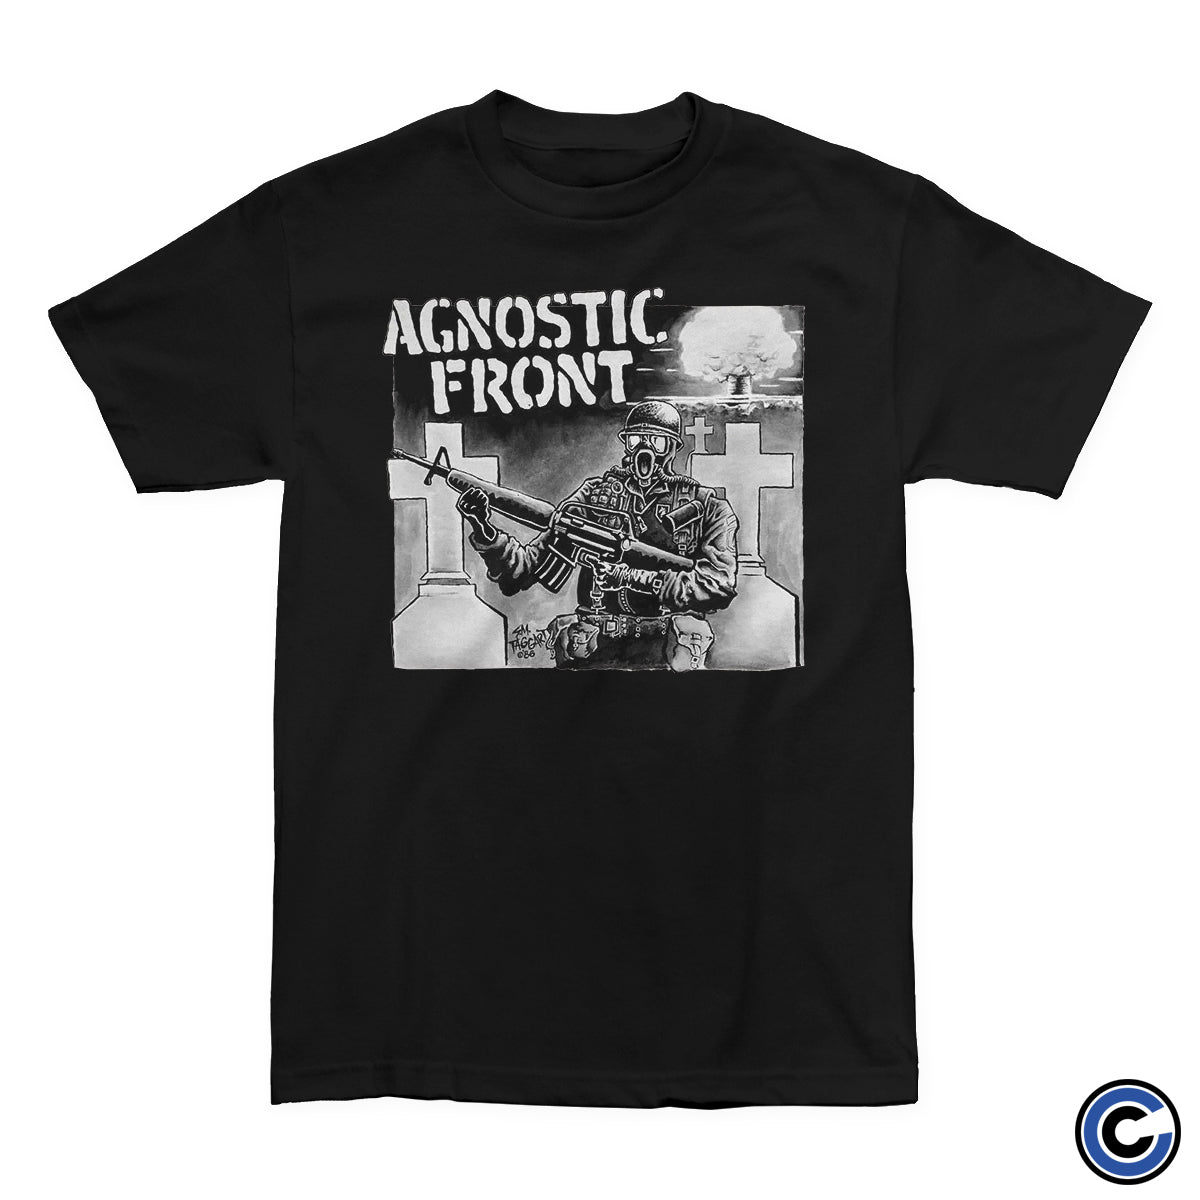 Agnostic Front "Gas Mask" Shirt